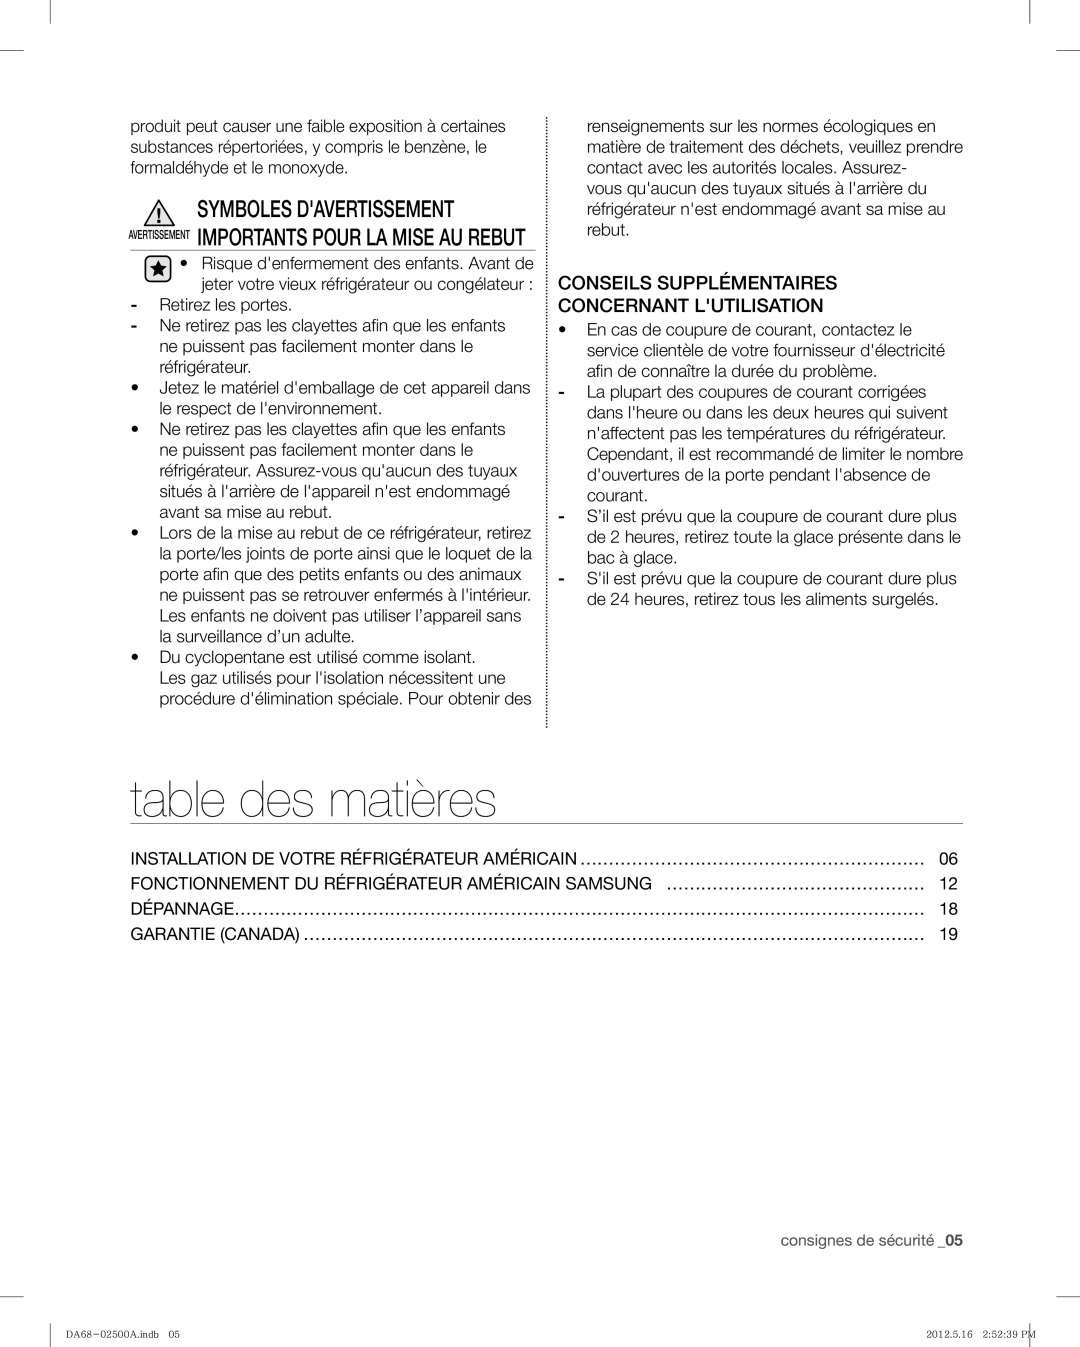 Samsung RSG307AAWP, RSG307AABP user manual Table des matières, Conseils Supplémentaires Concernant Lutilisation 